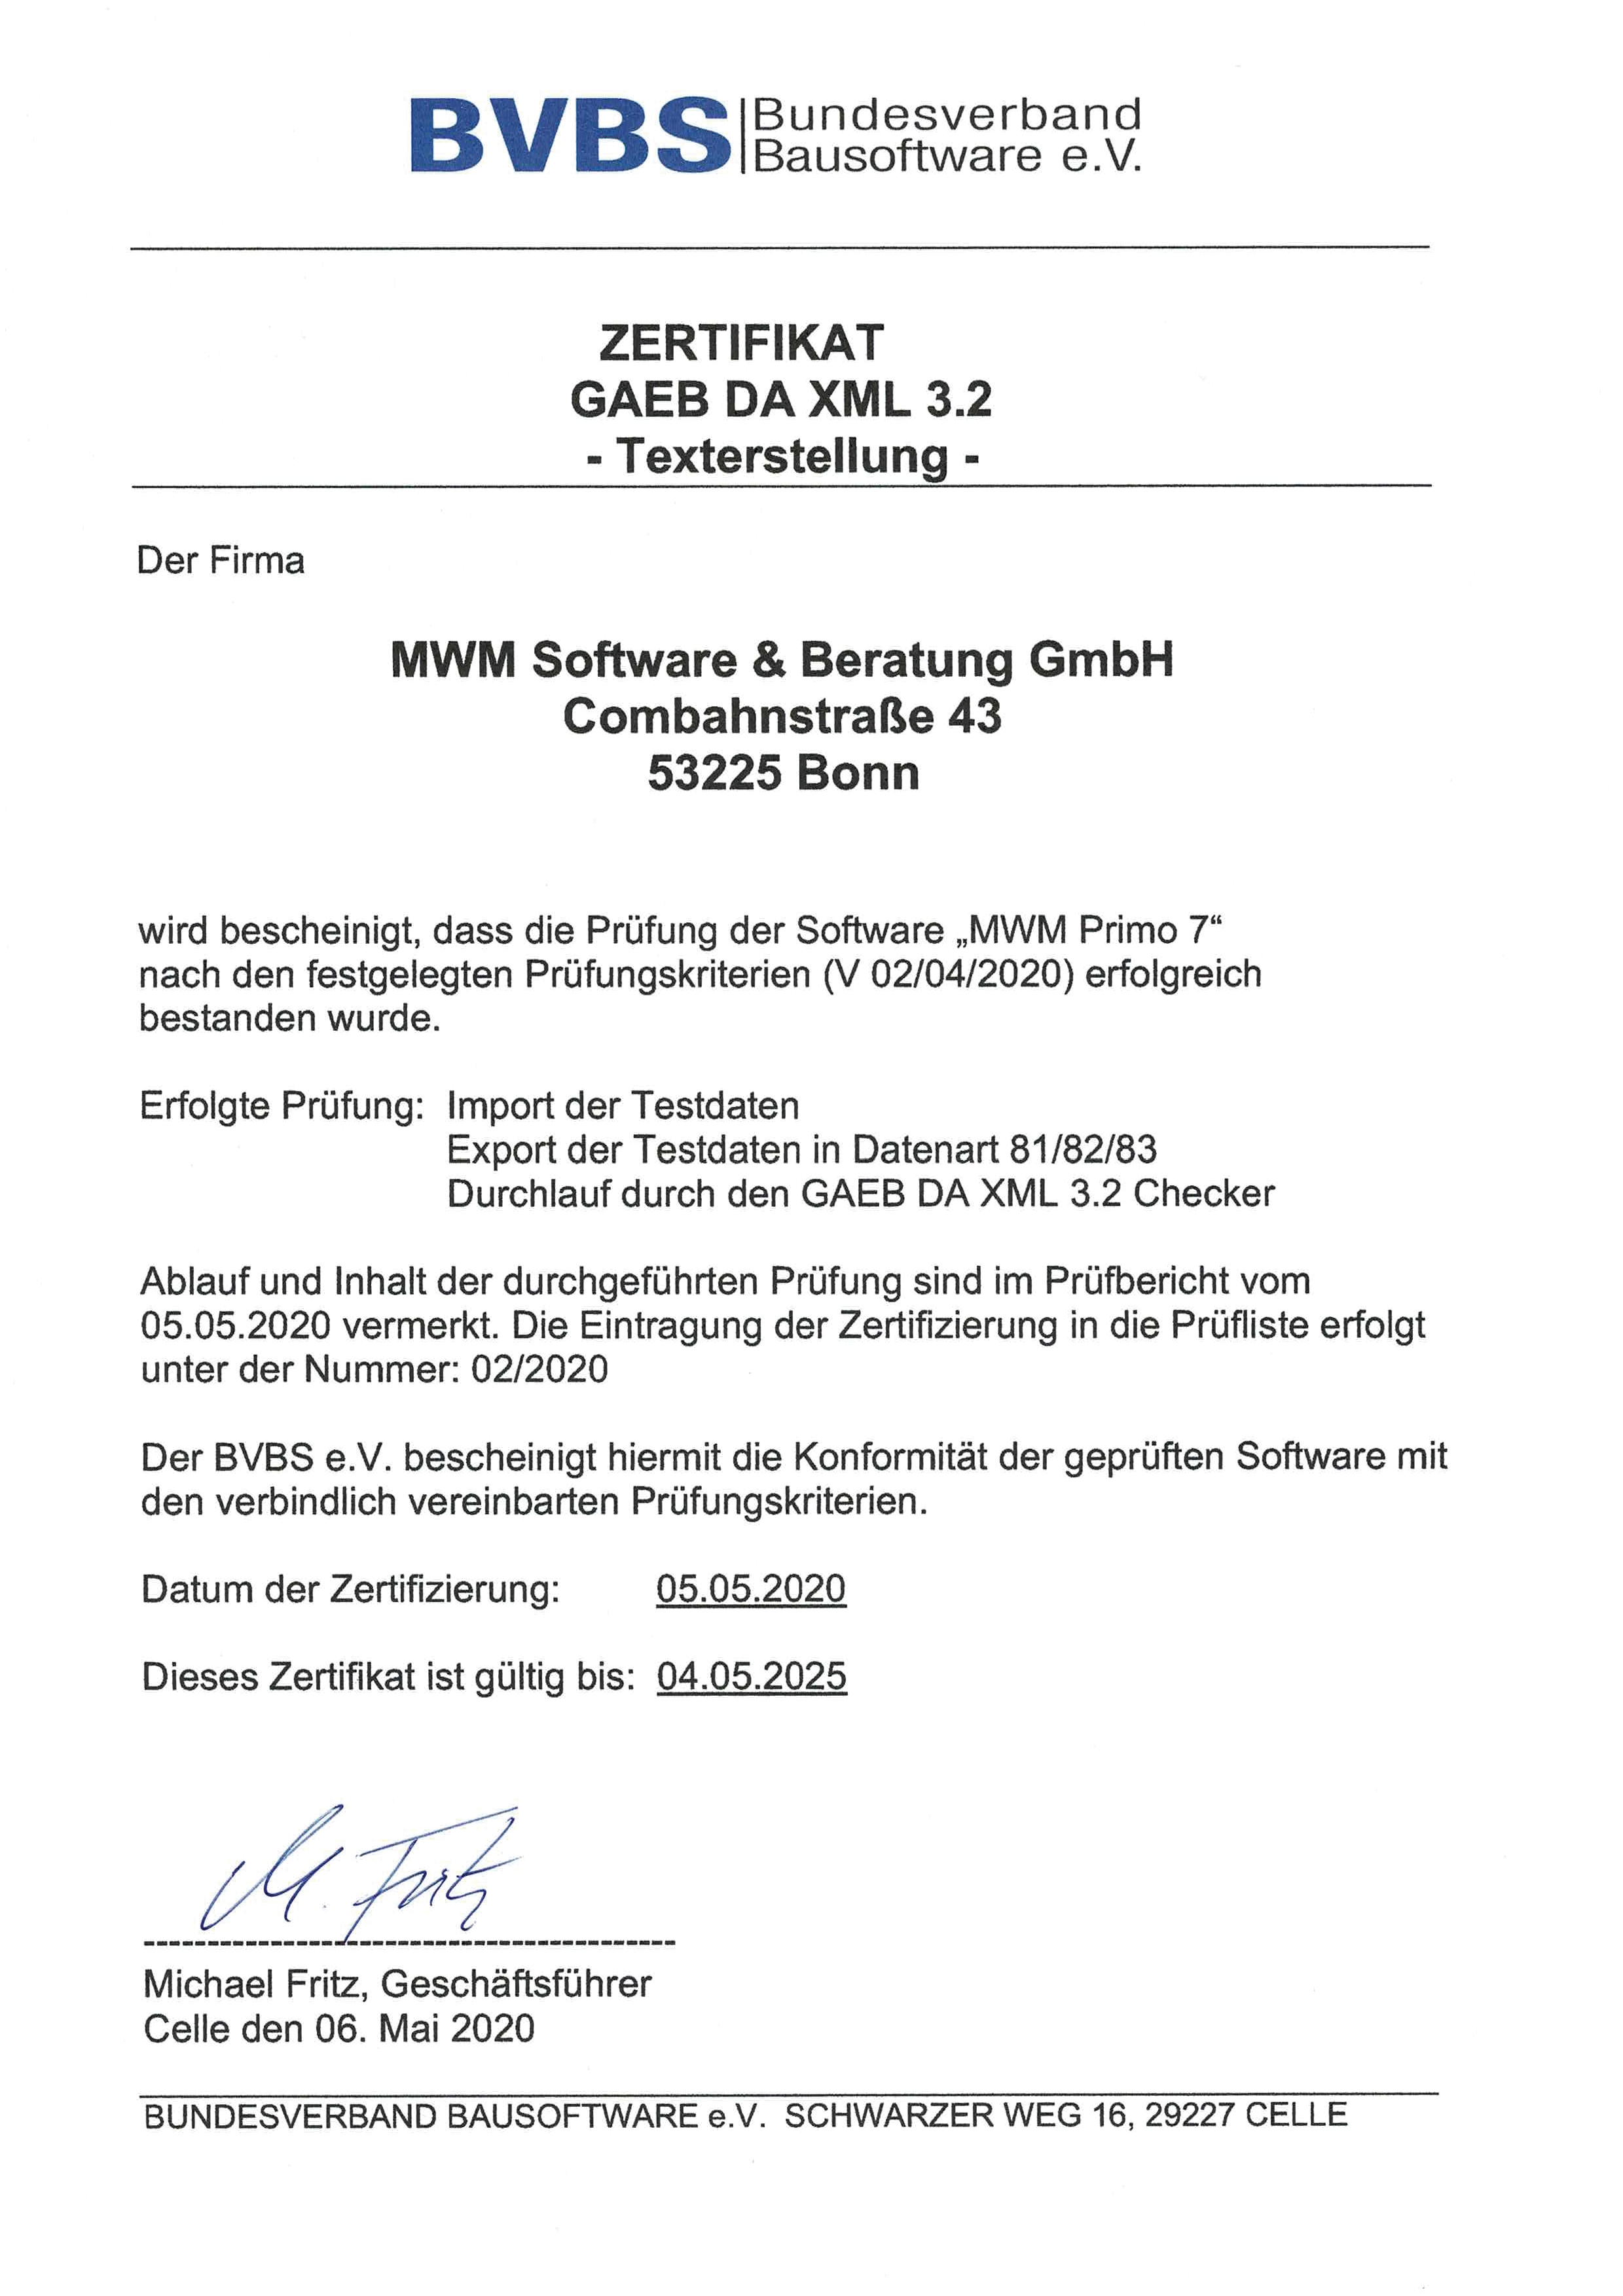 GAEB_Zertifizierung_3.2_MWM-Primo_7.jpg